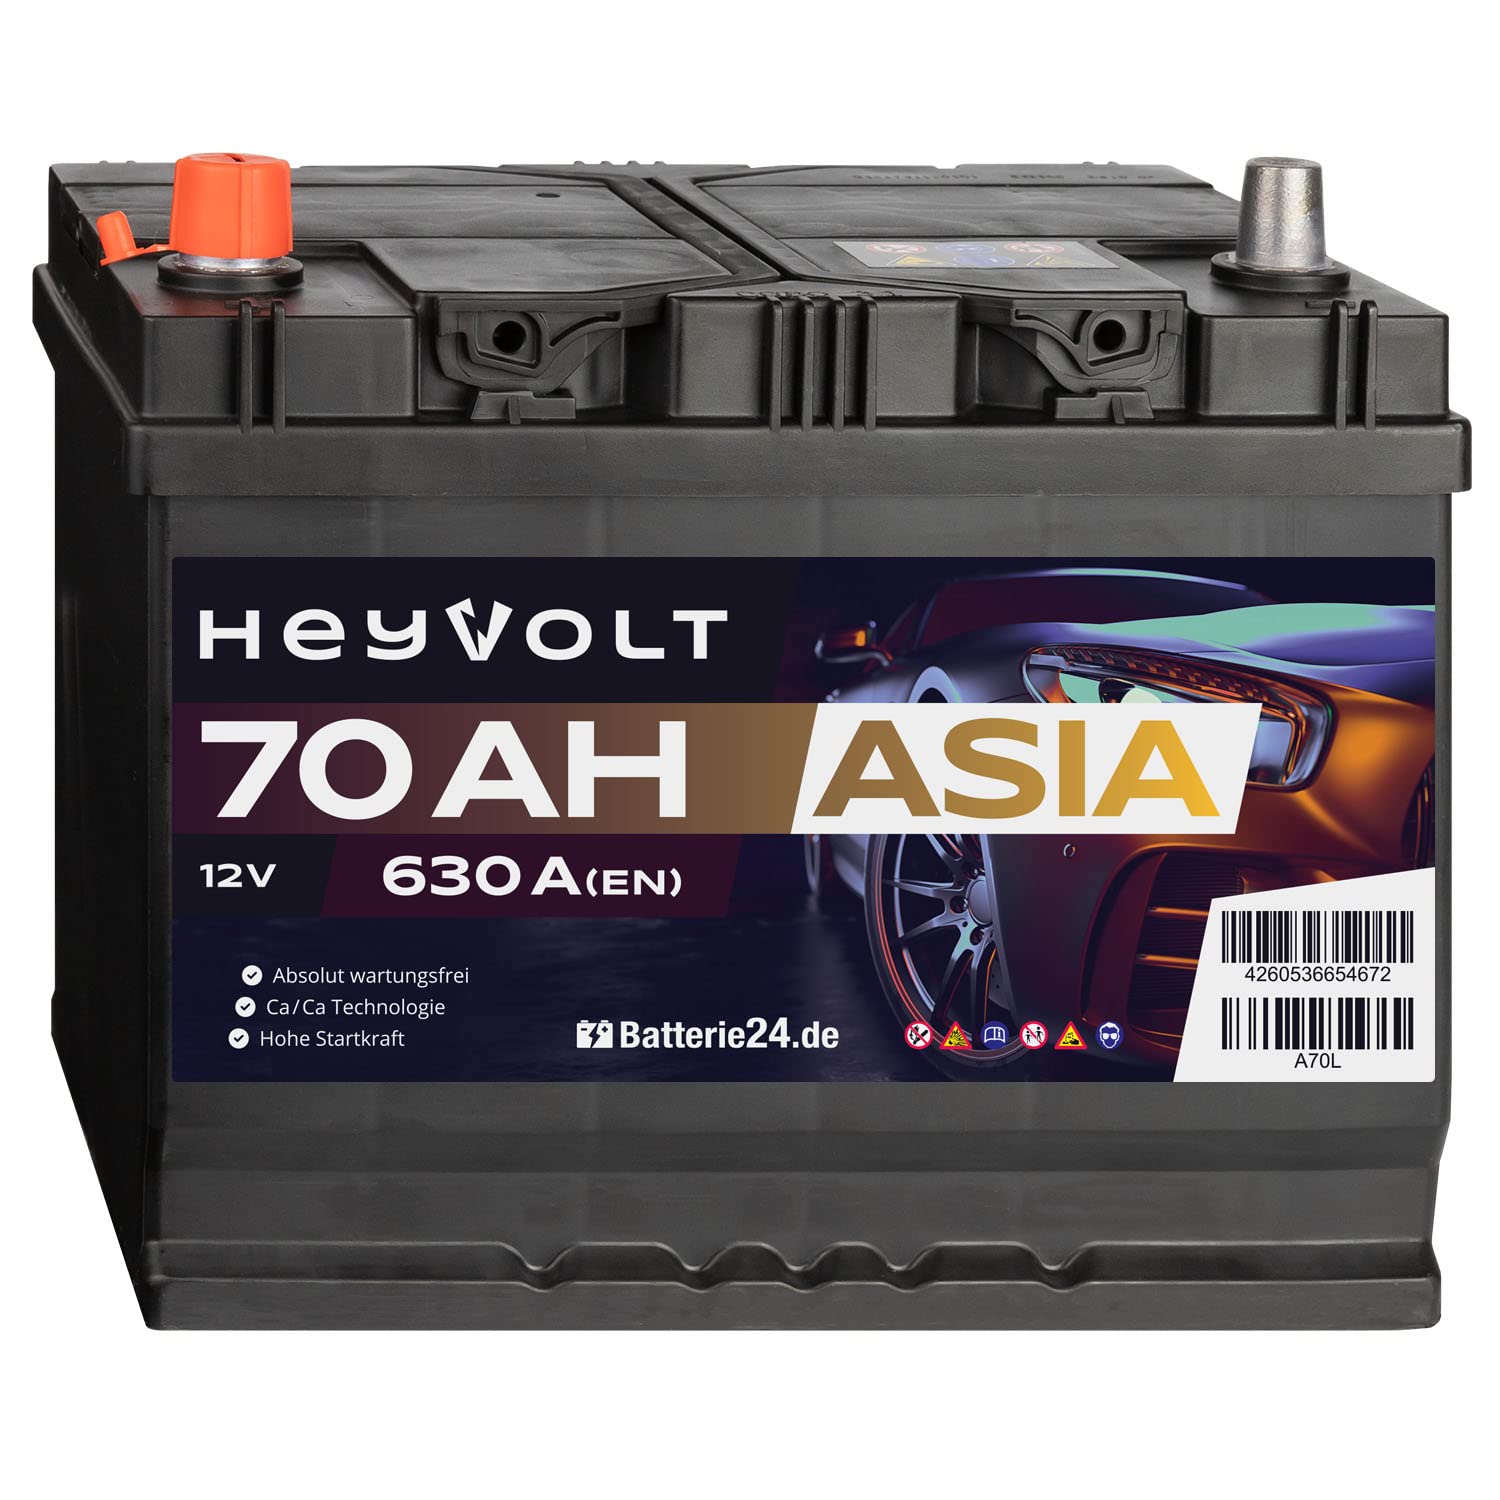 HeyVolt Asia Autobatterie 12V 70Ah 630A/EN Starterbatterie, absolut wartungsfrei, Pluspol Links